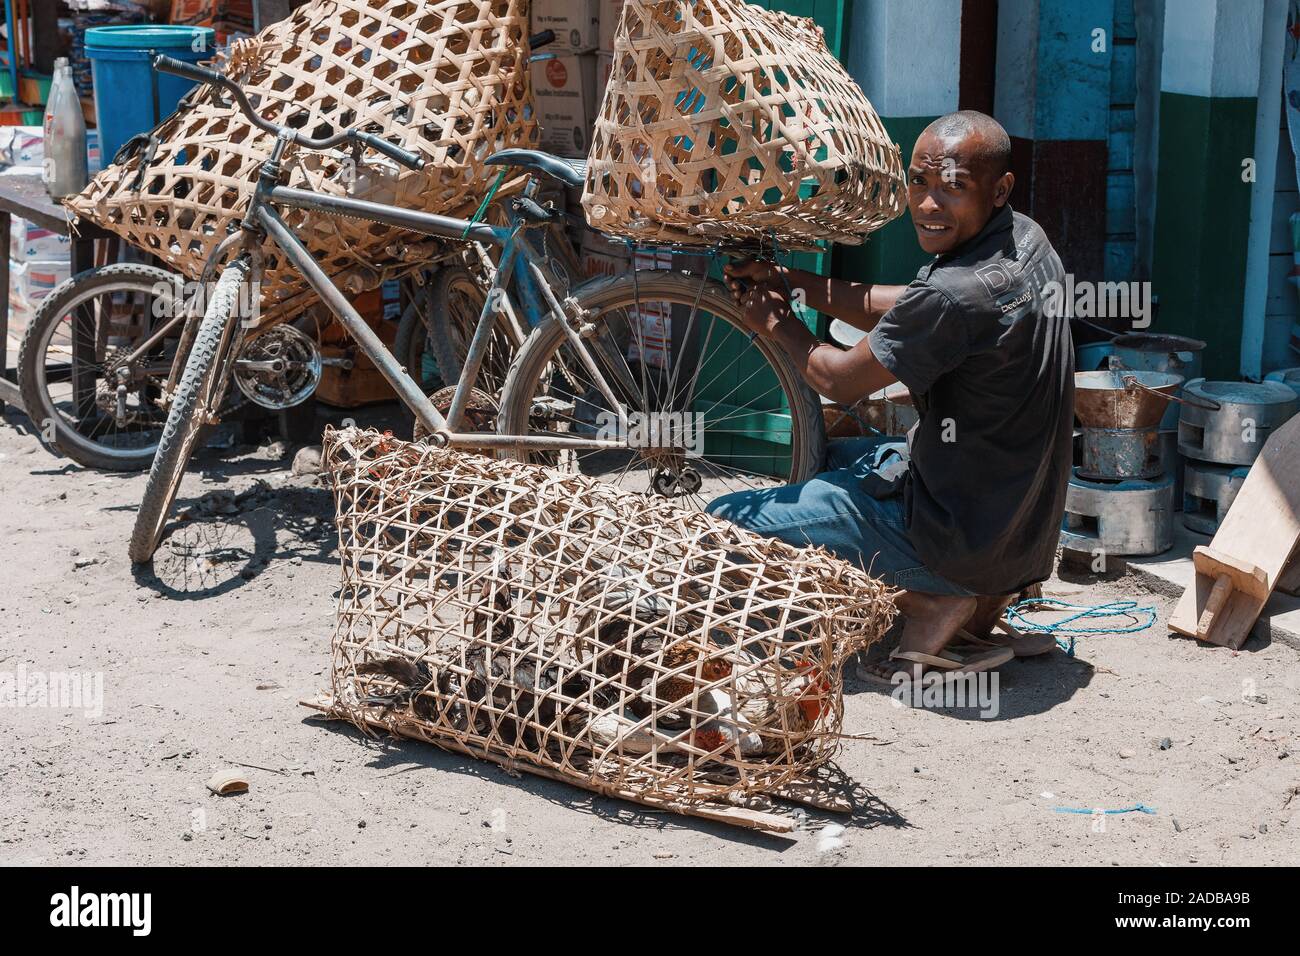 Madagaskar Oktober 18.2016 Straße Huhn speichern. Verkäufer mann Vorbereitung der Hühner zu verkauft werden. Maroantsetra Oktober 18. 2016, Madagaskar. Stockfoto